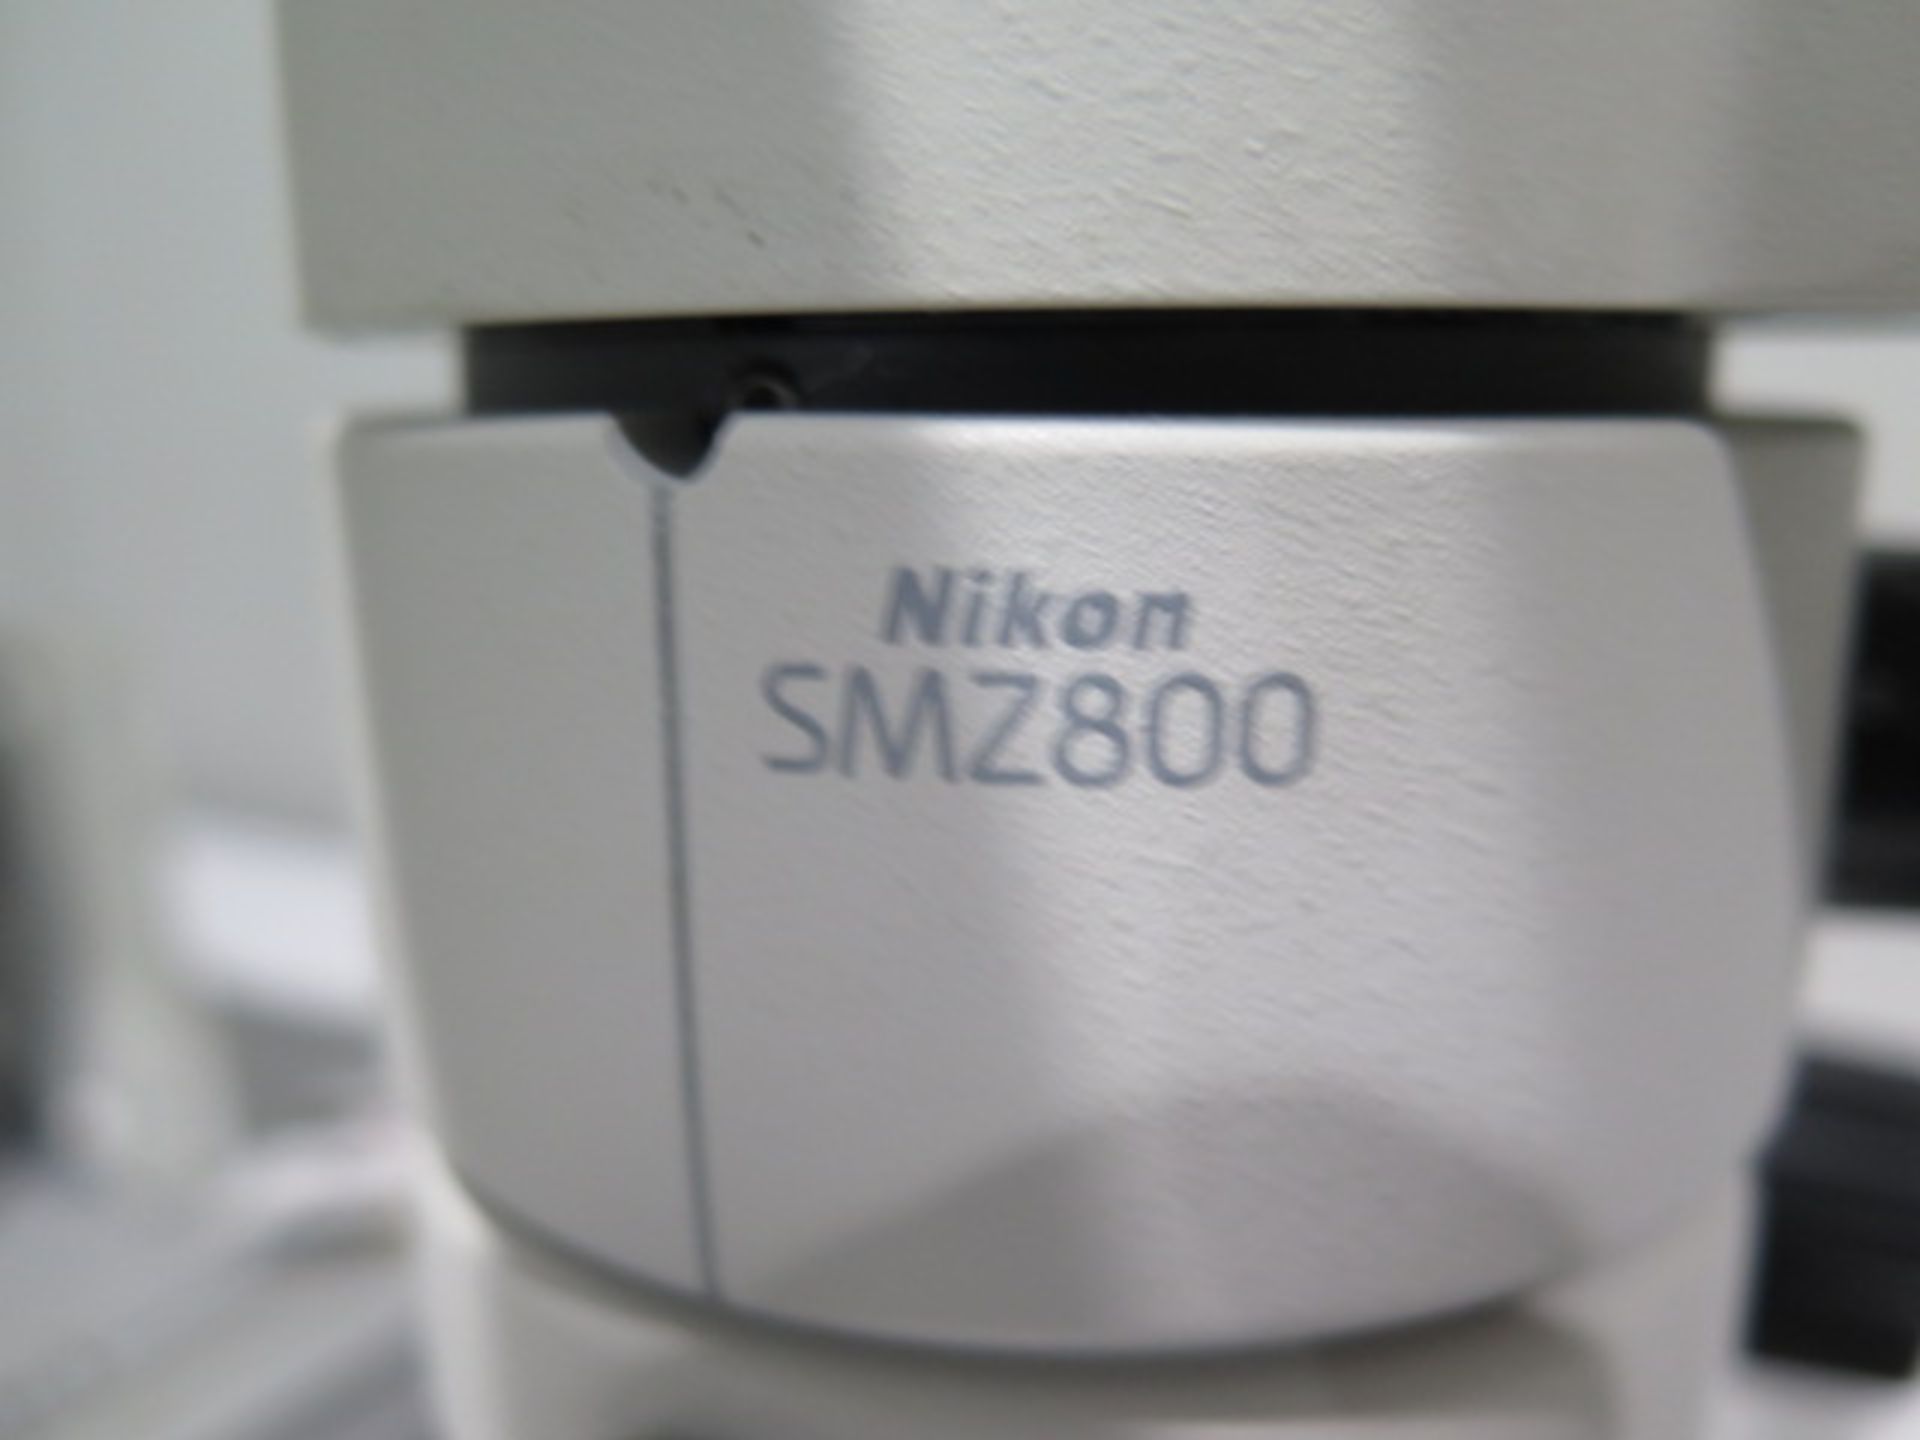 Nikon SMZ800 Monocular Microscope w/ Phototube Video Splitter Port (NO CAMERA), A.G. Heinze Dyna - Image 10 of 10